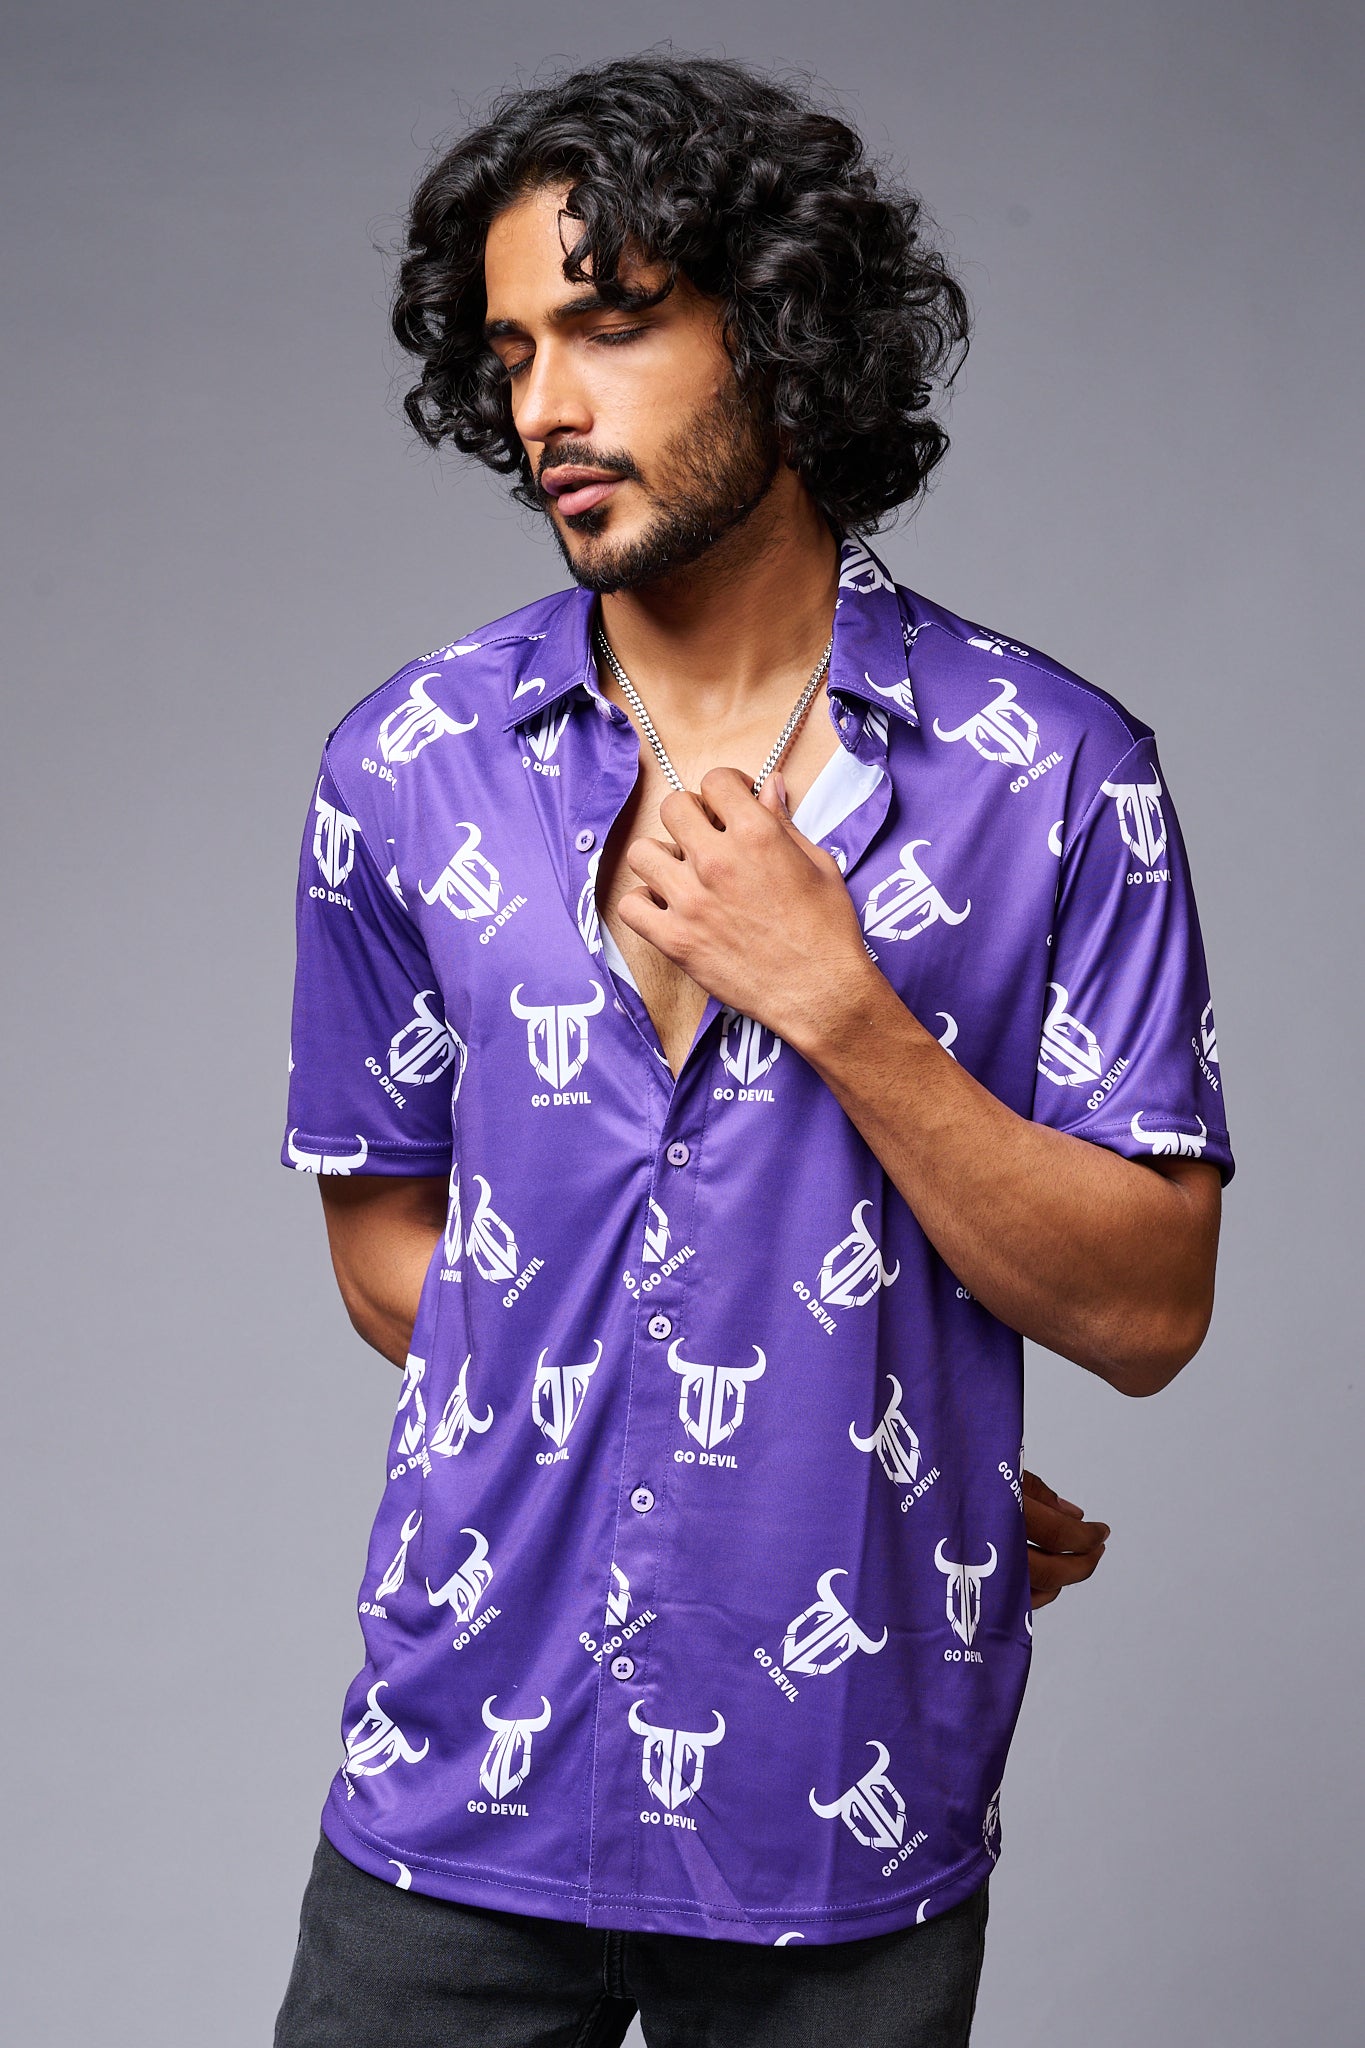 Go Devil (with logo) Printed Purple Shirt for Men - Go Devil